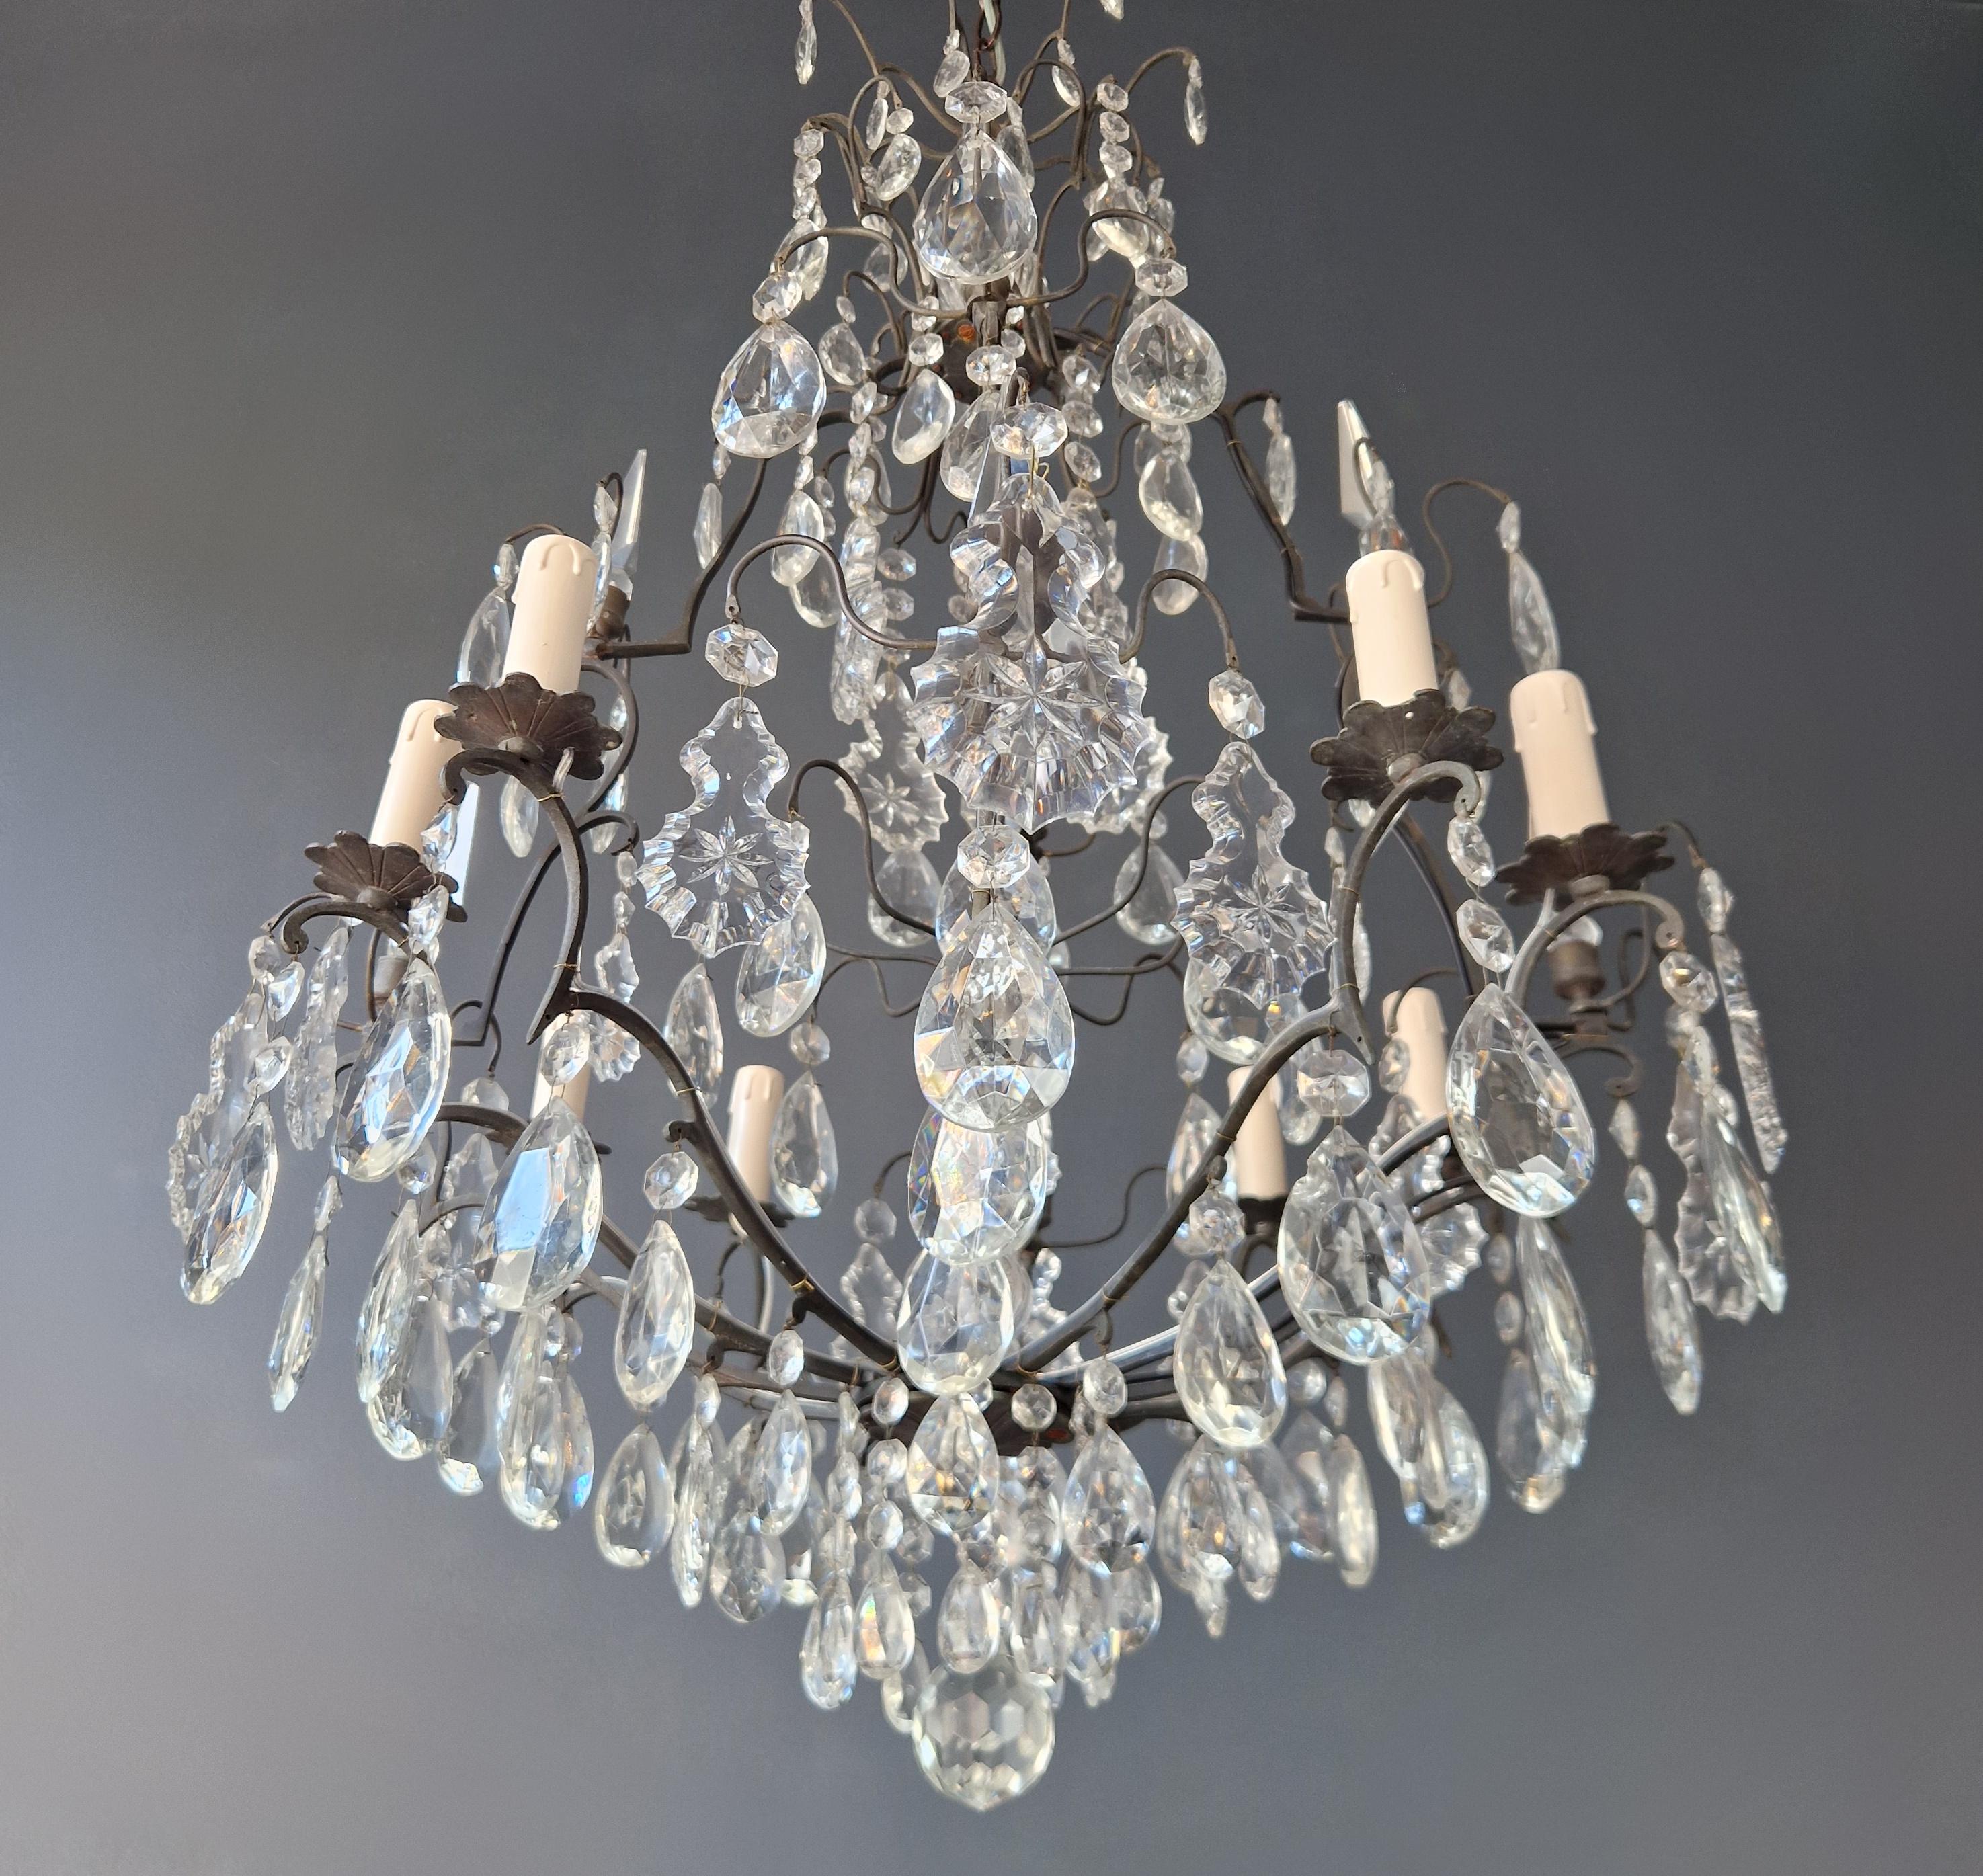 Brass Antique French Crystal Chandelier Ceiling Lamp Lustre Art Nouveau Lamp